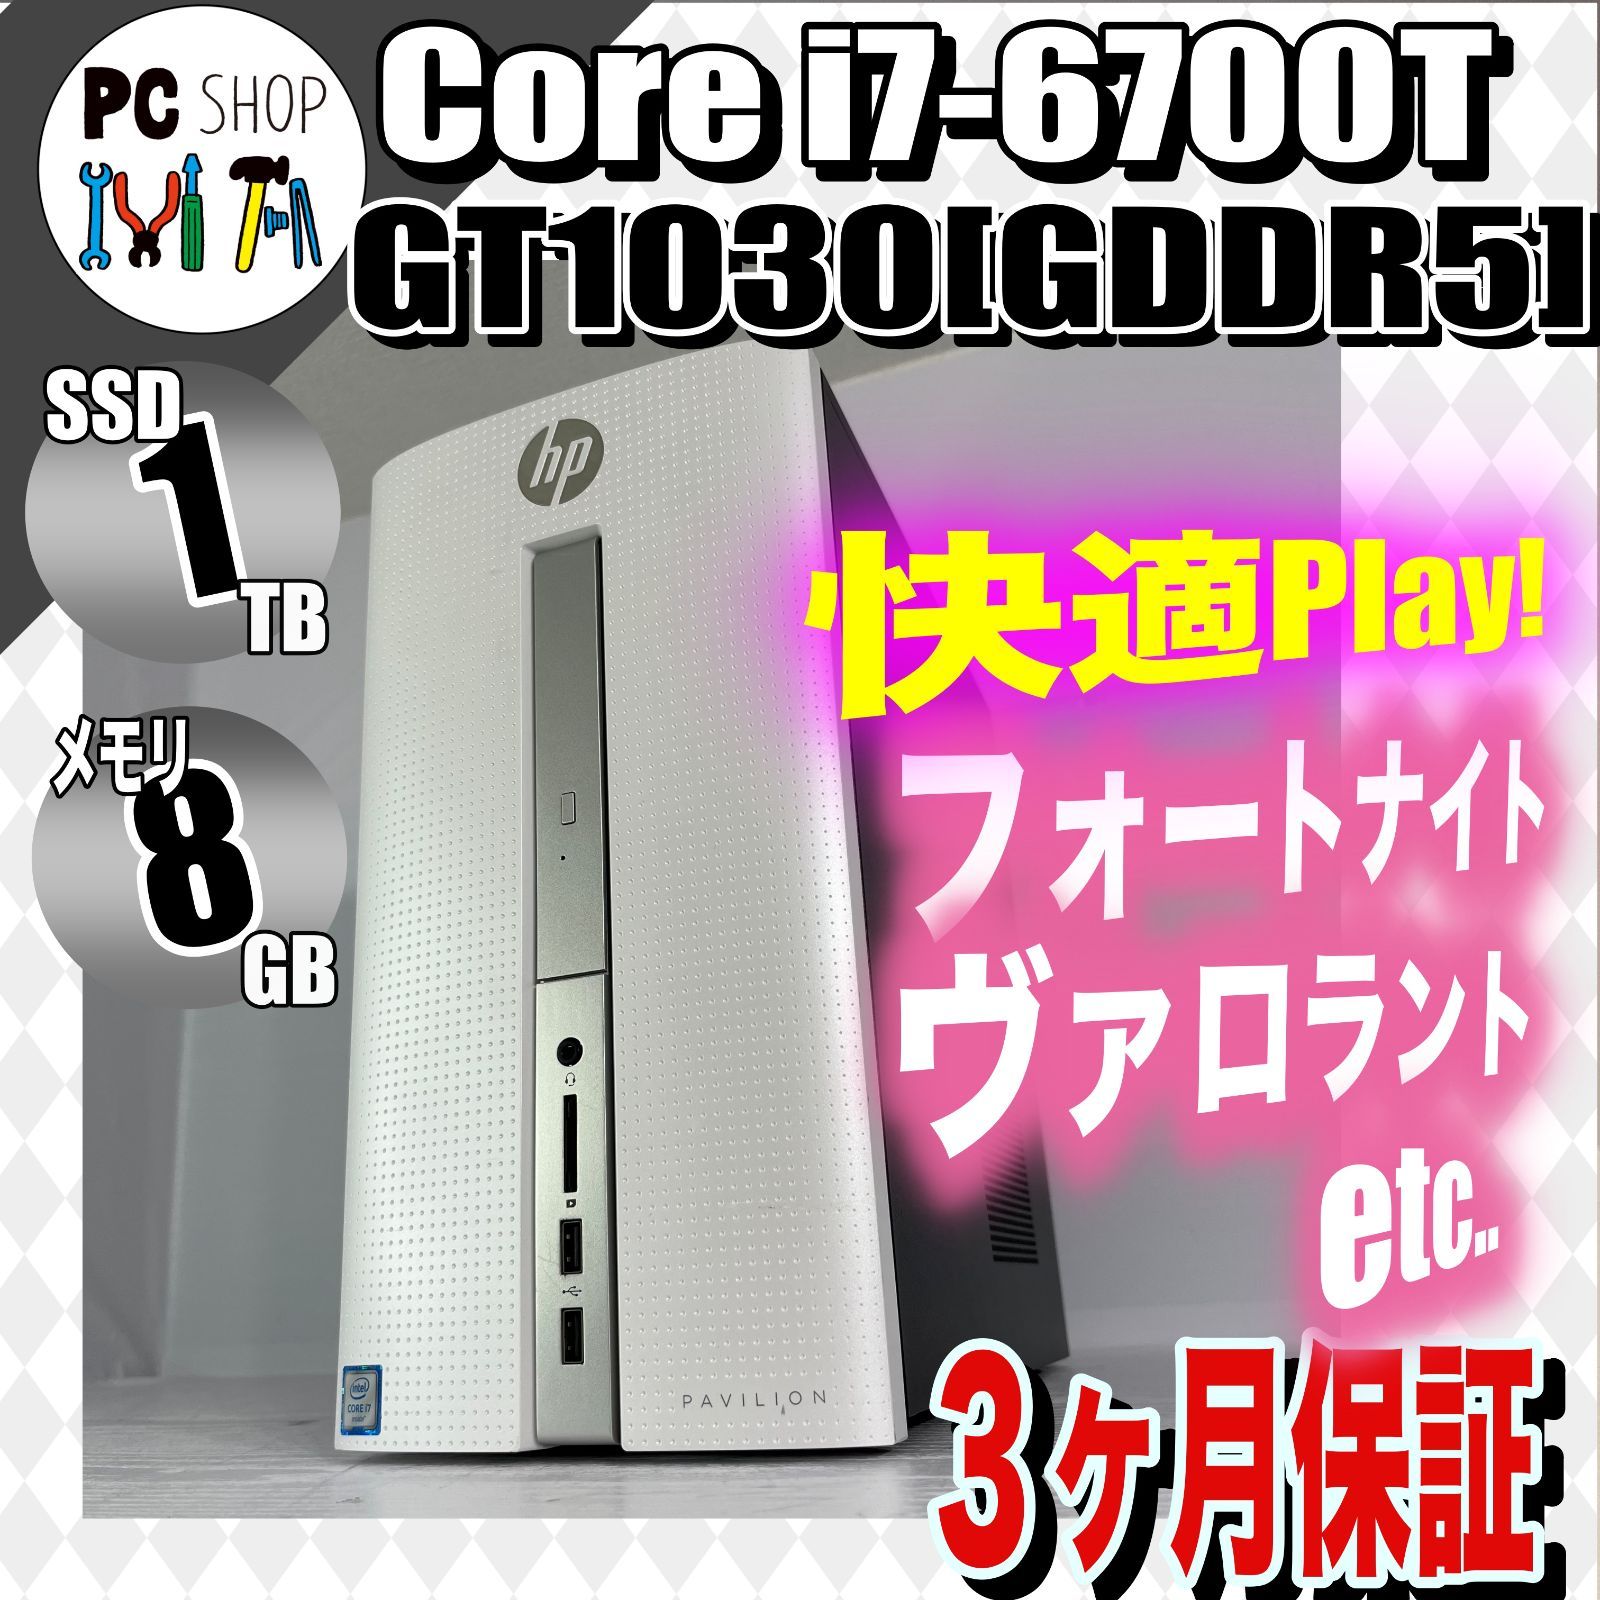 MA-010102]ゲーミングPC GT1030 Core i7-6700T 第6世代 ホワイト SSD ...